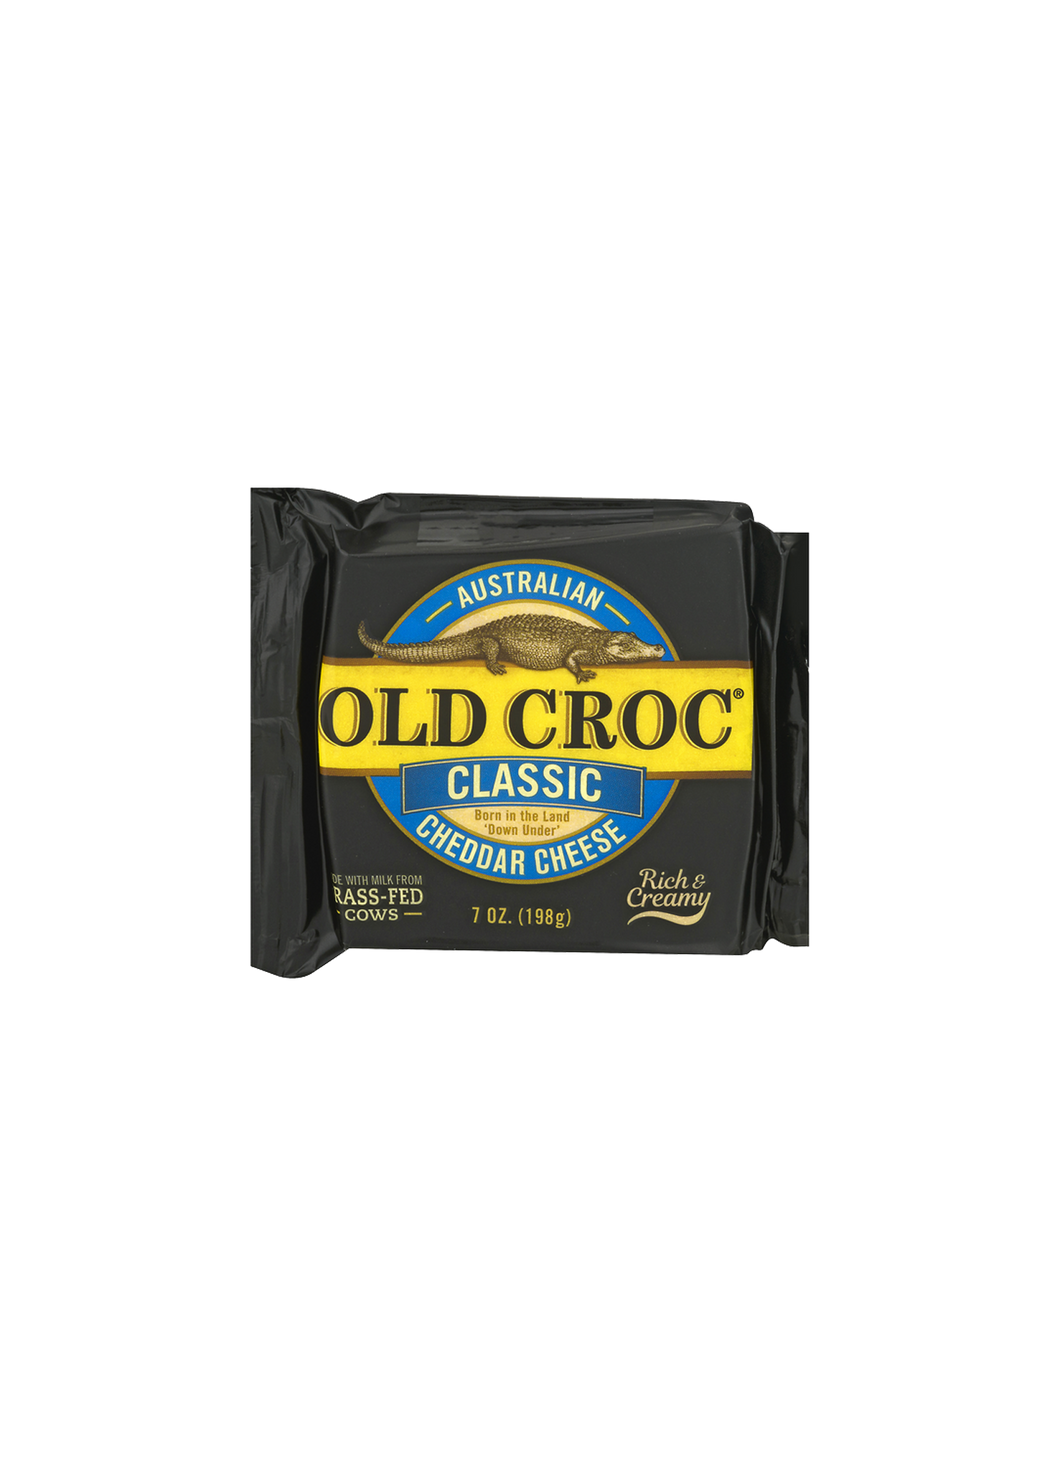 Australian Old Croc Classic Cheddar Cheese 198g